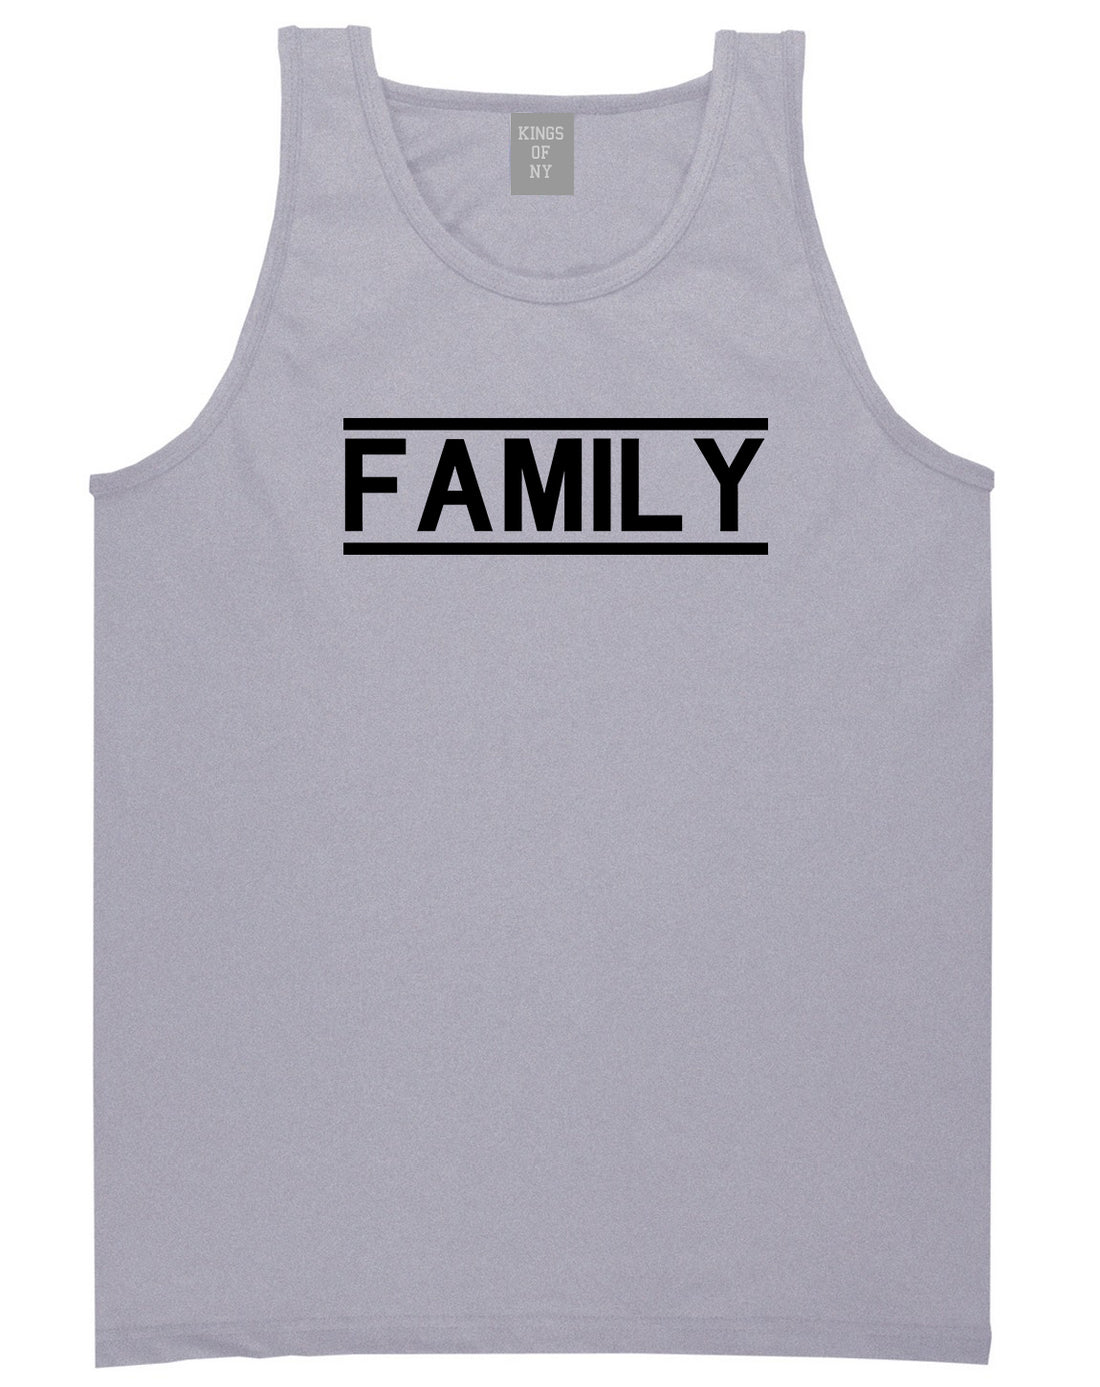 Family Fam Squad Mens Grey Tank Top Shirt by KINGS OF NY